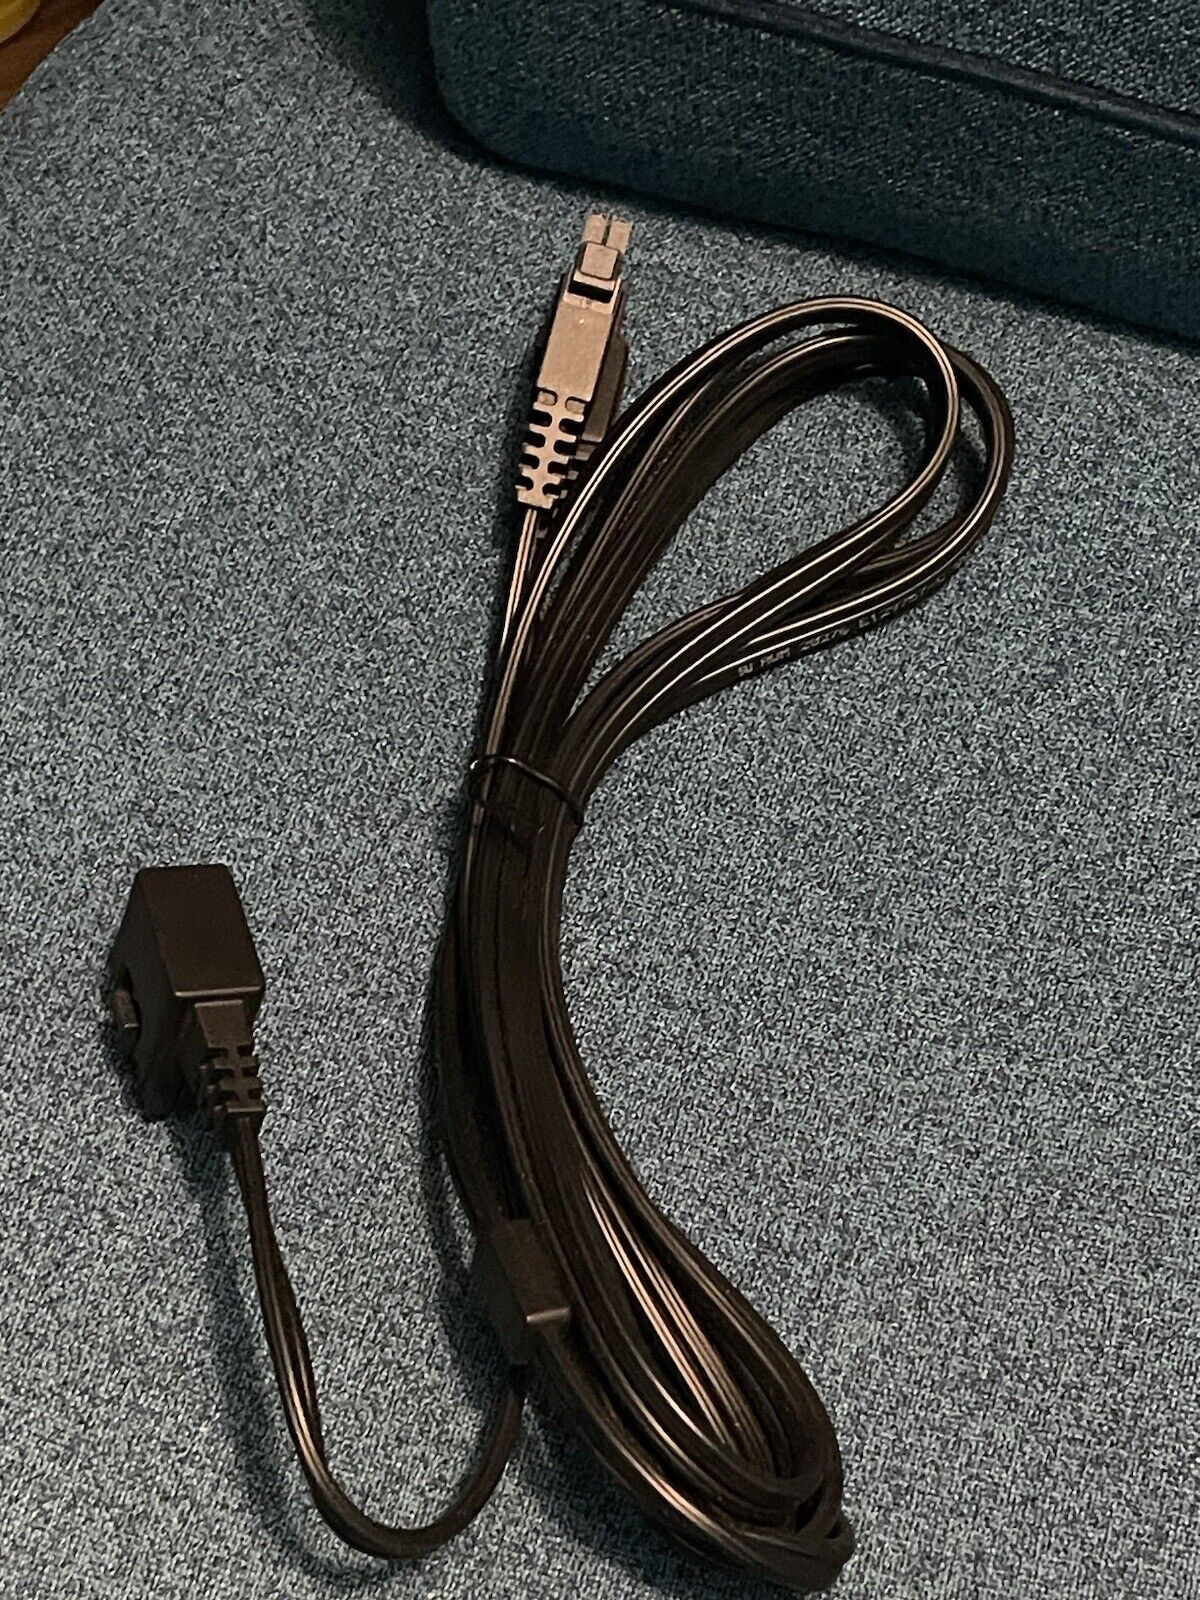 Bose Speaker Wire